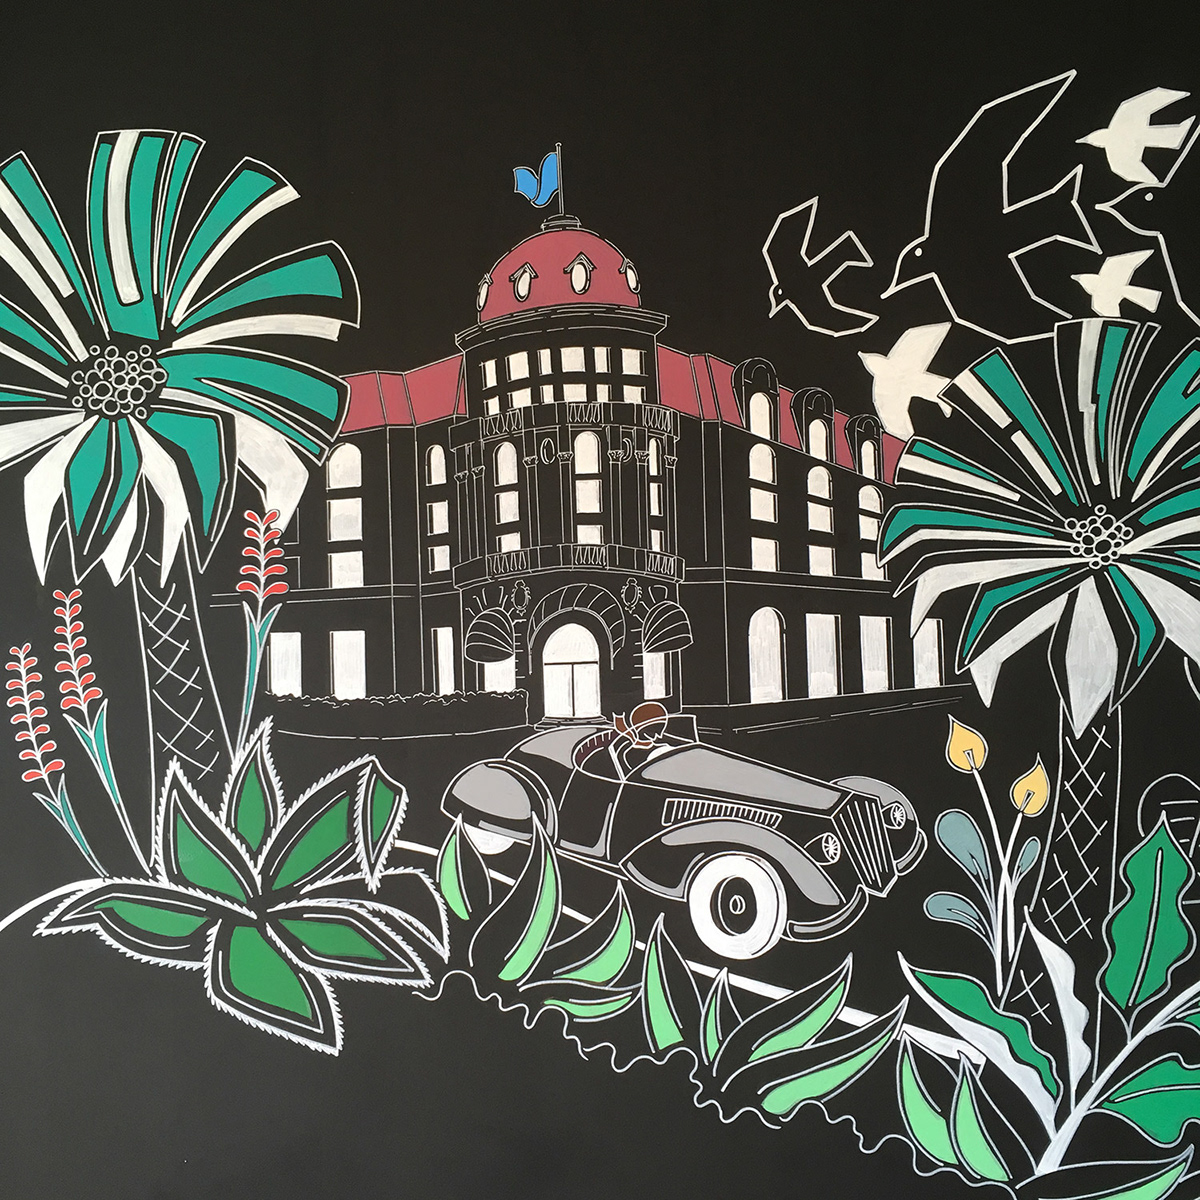 acrylic painting artwork handpainted hotel hotel decor Marker Mural Murals painting   wall art